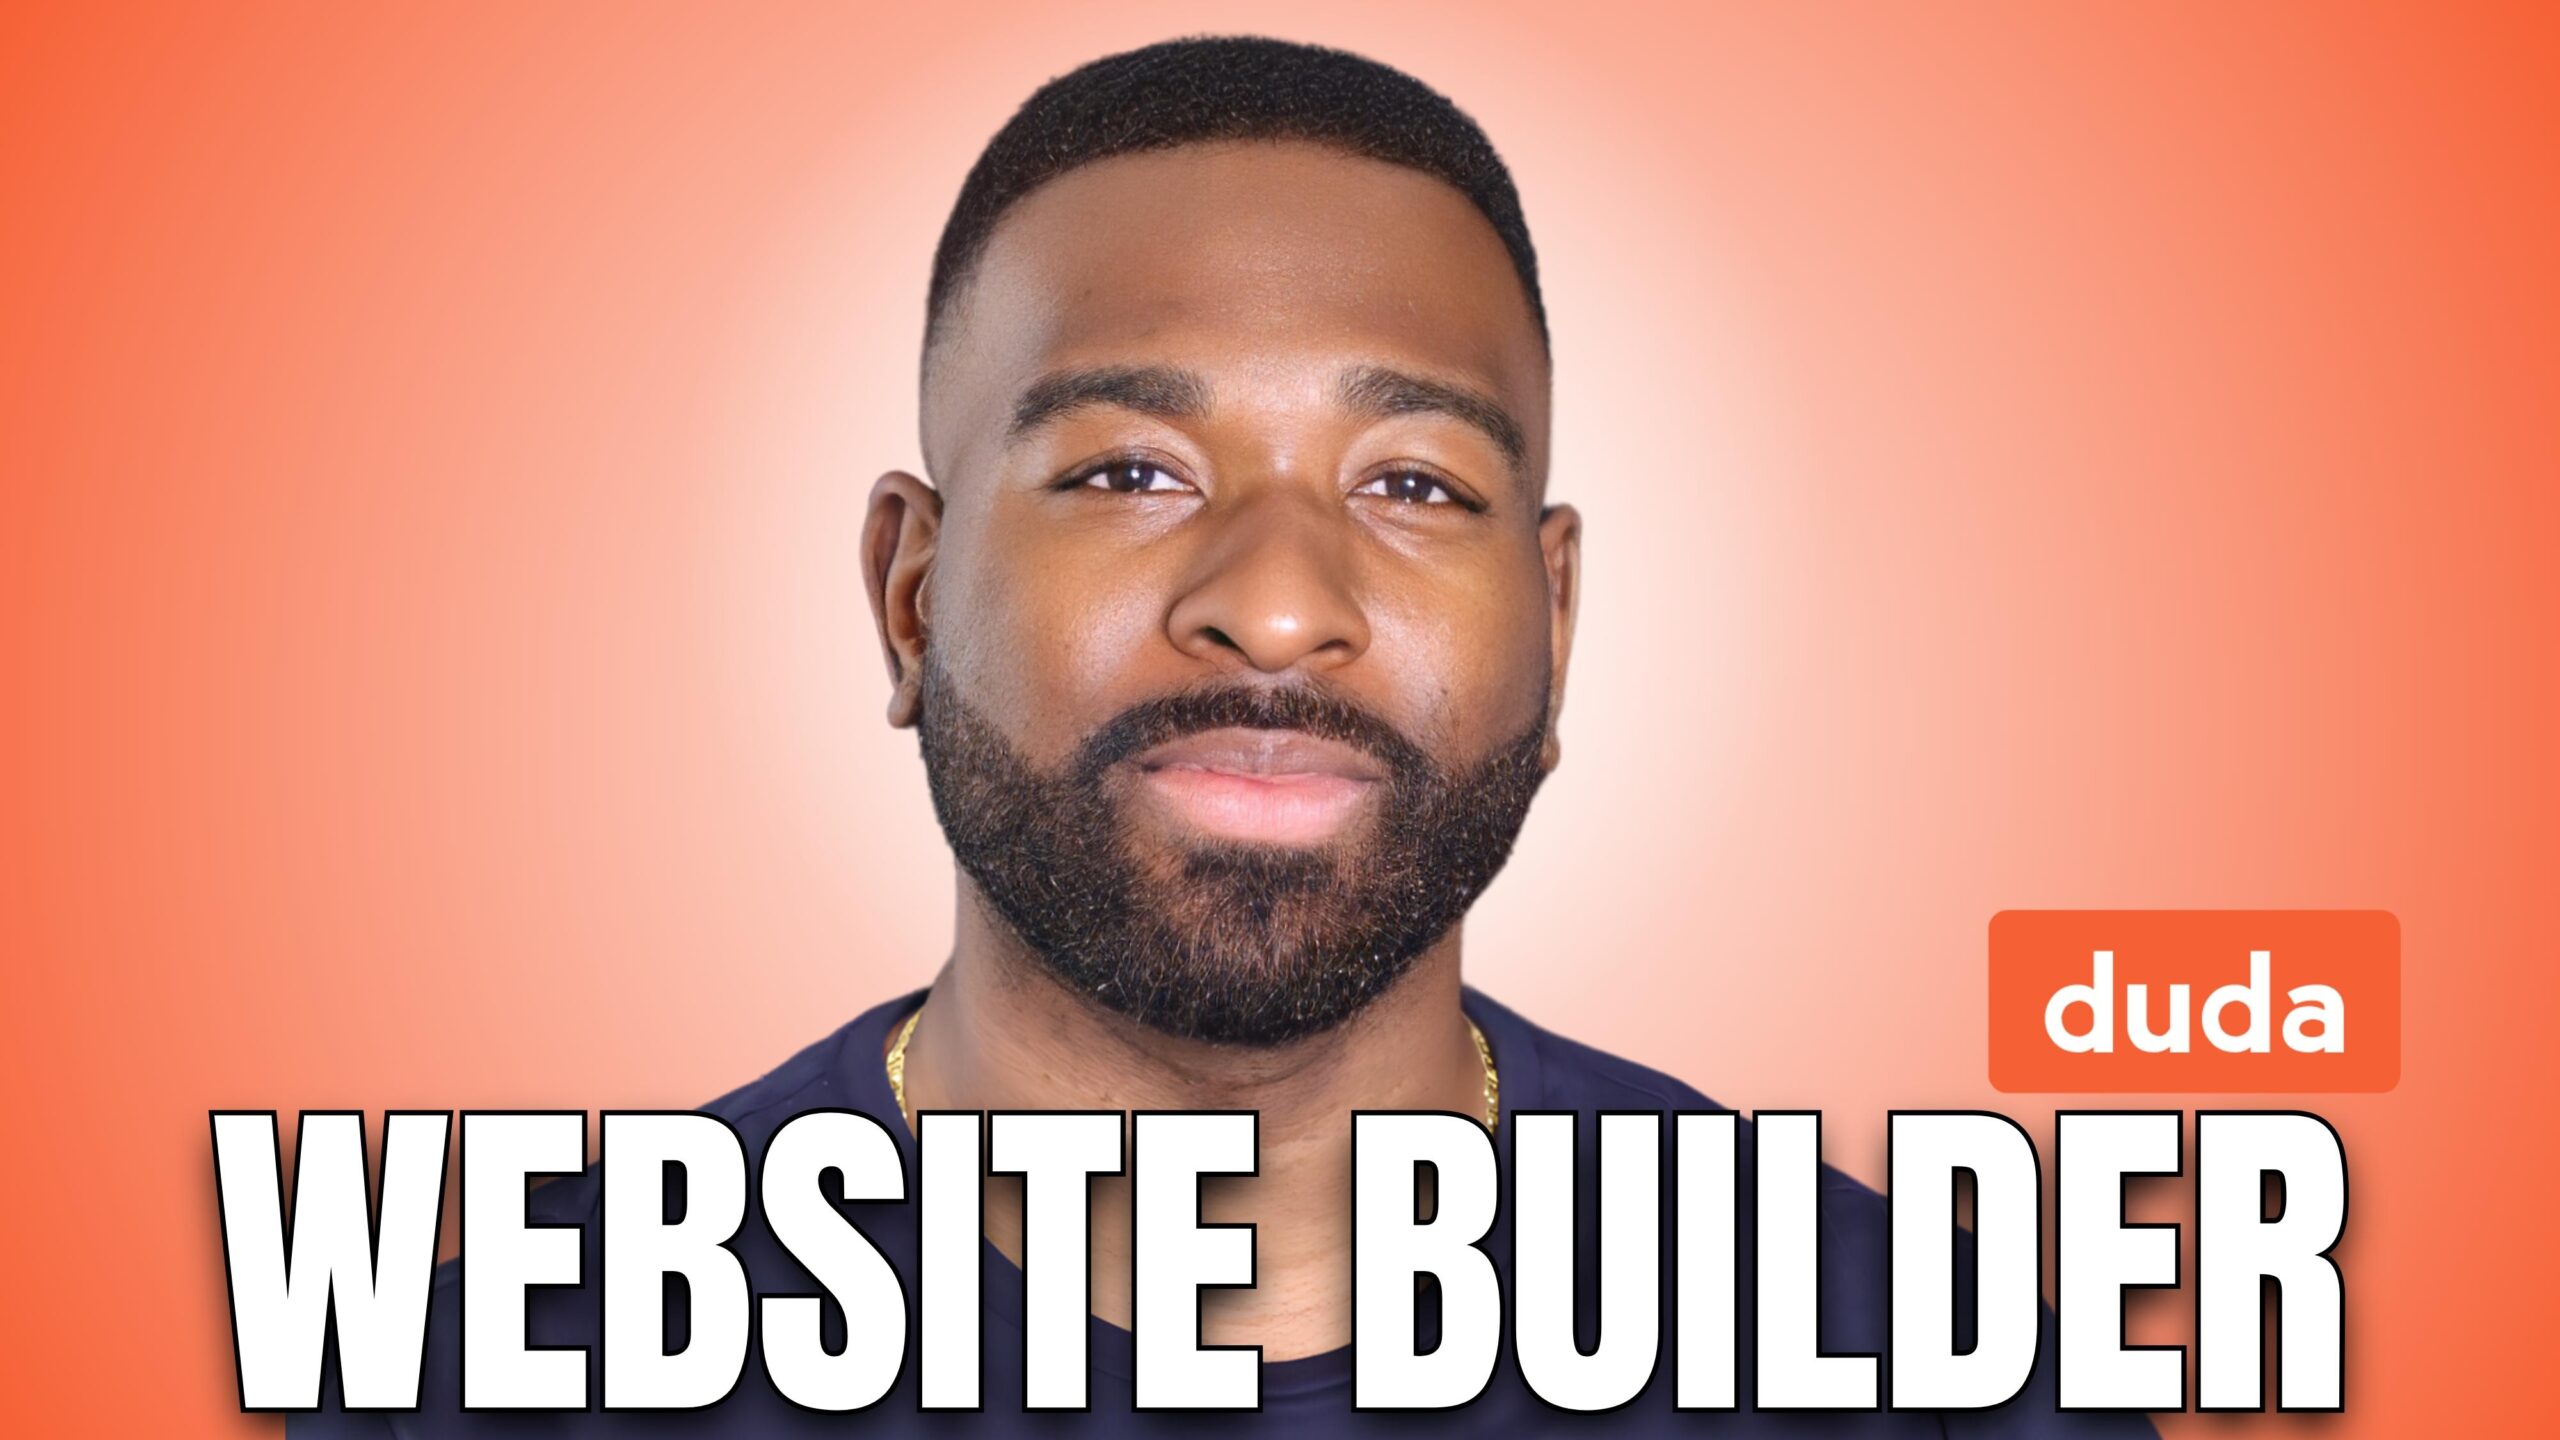 Duda Website Builder The Perfect Tool For Web Designers